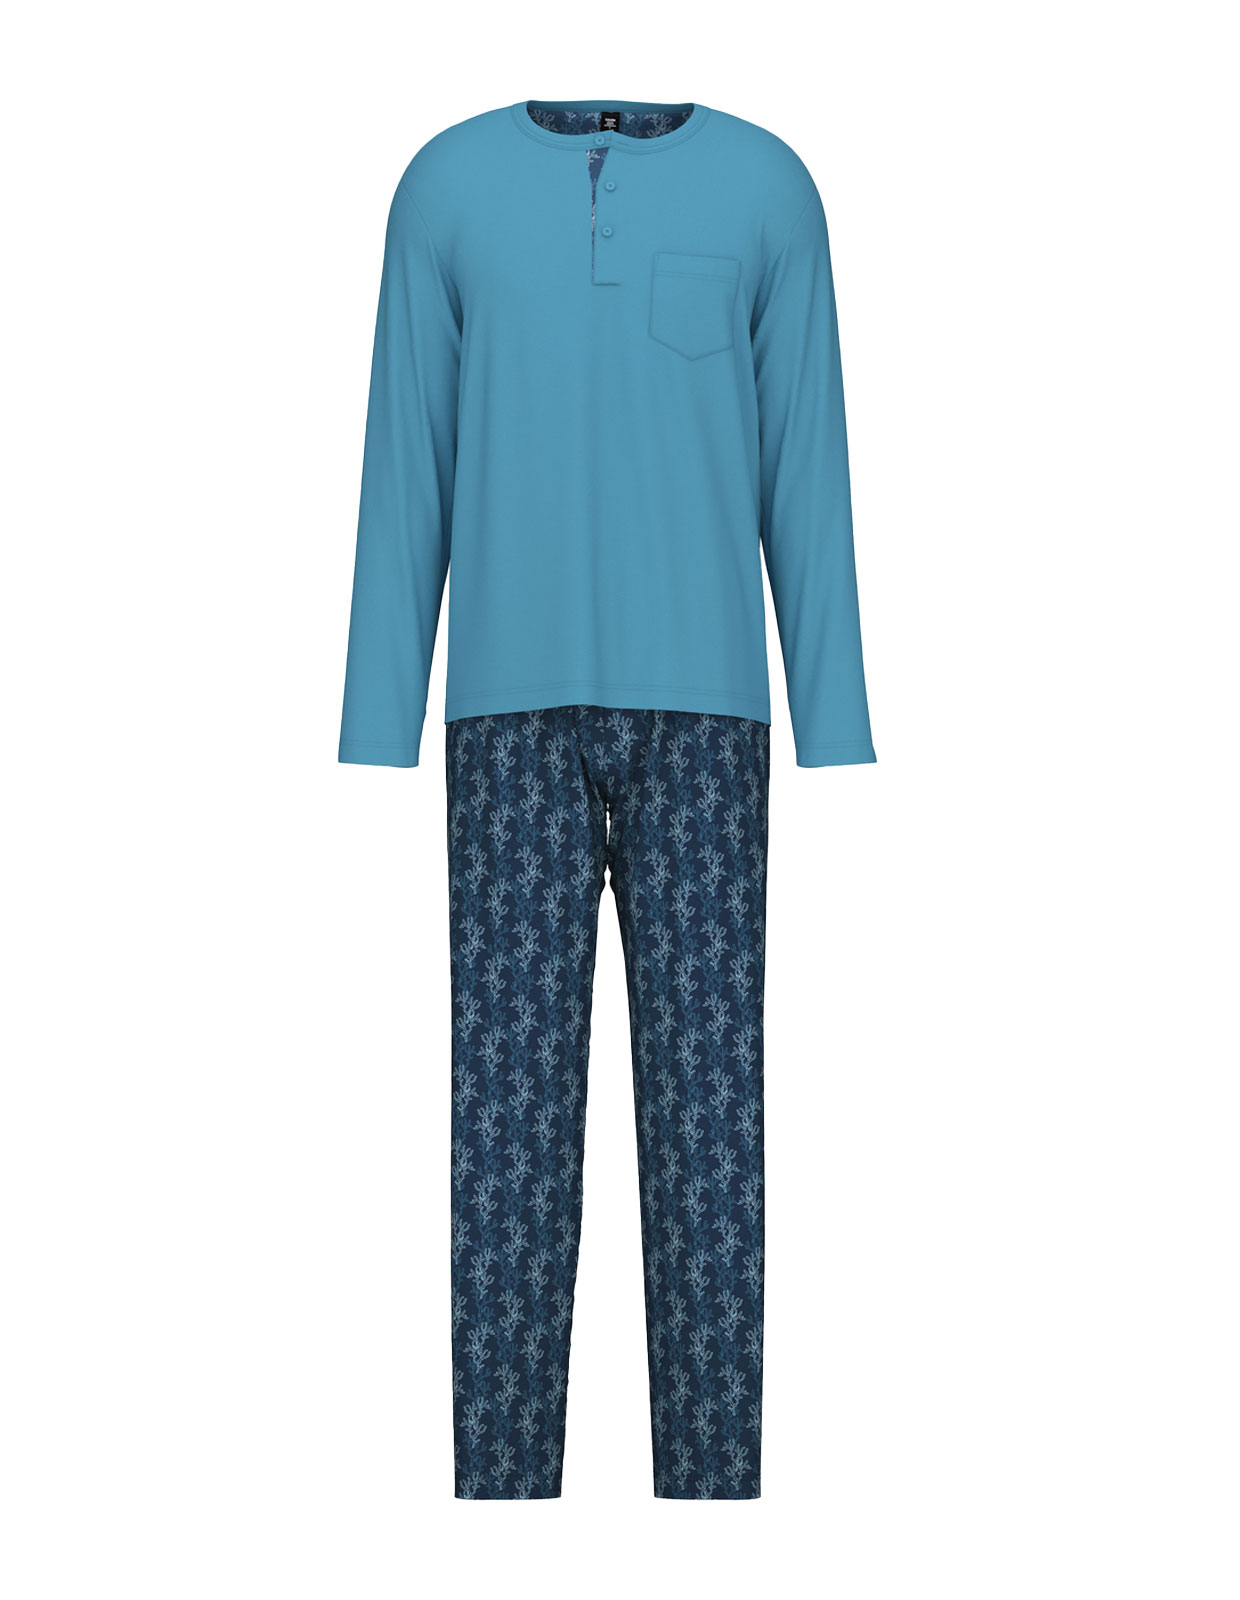 Pyjamas Blå Stl XL